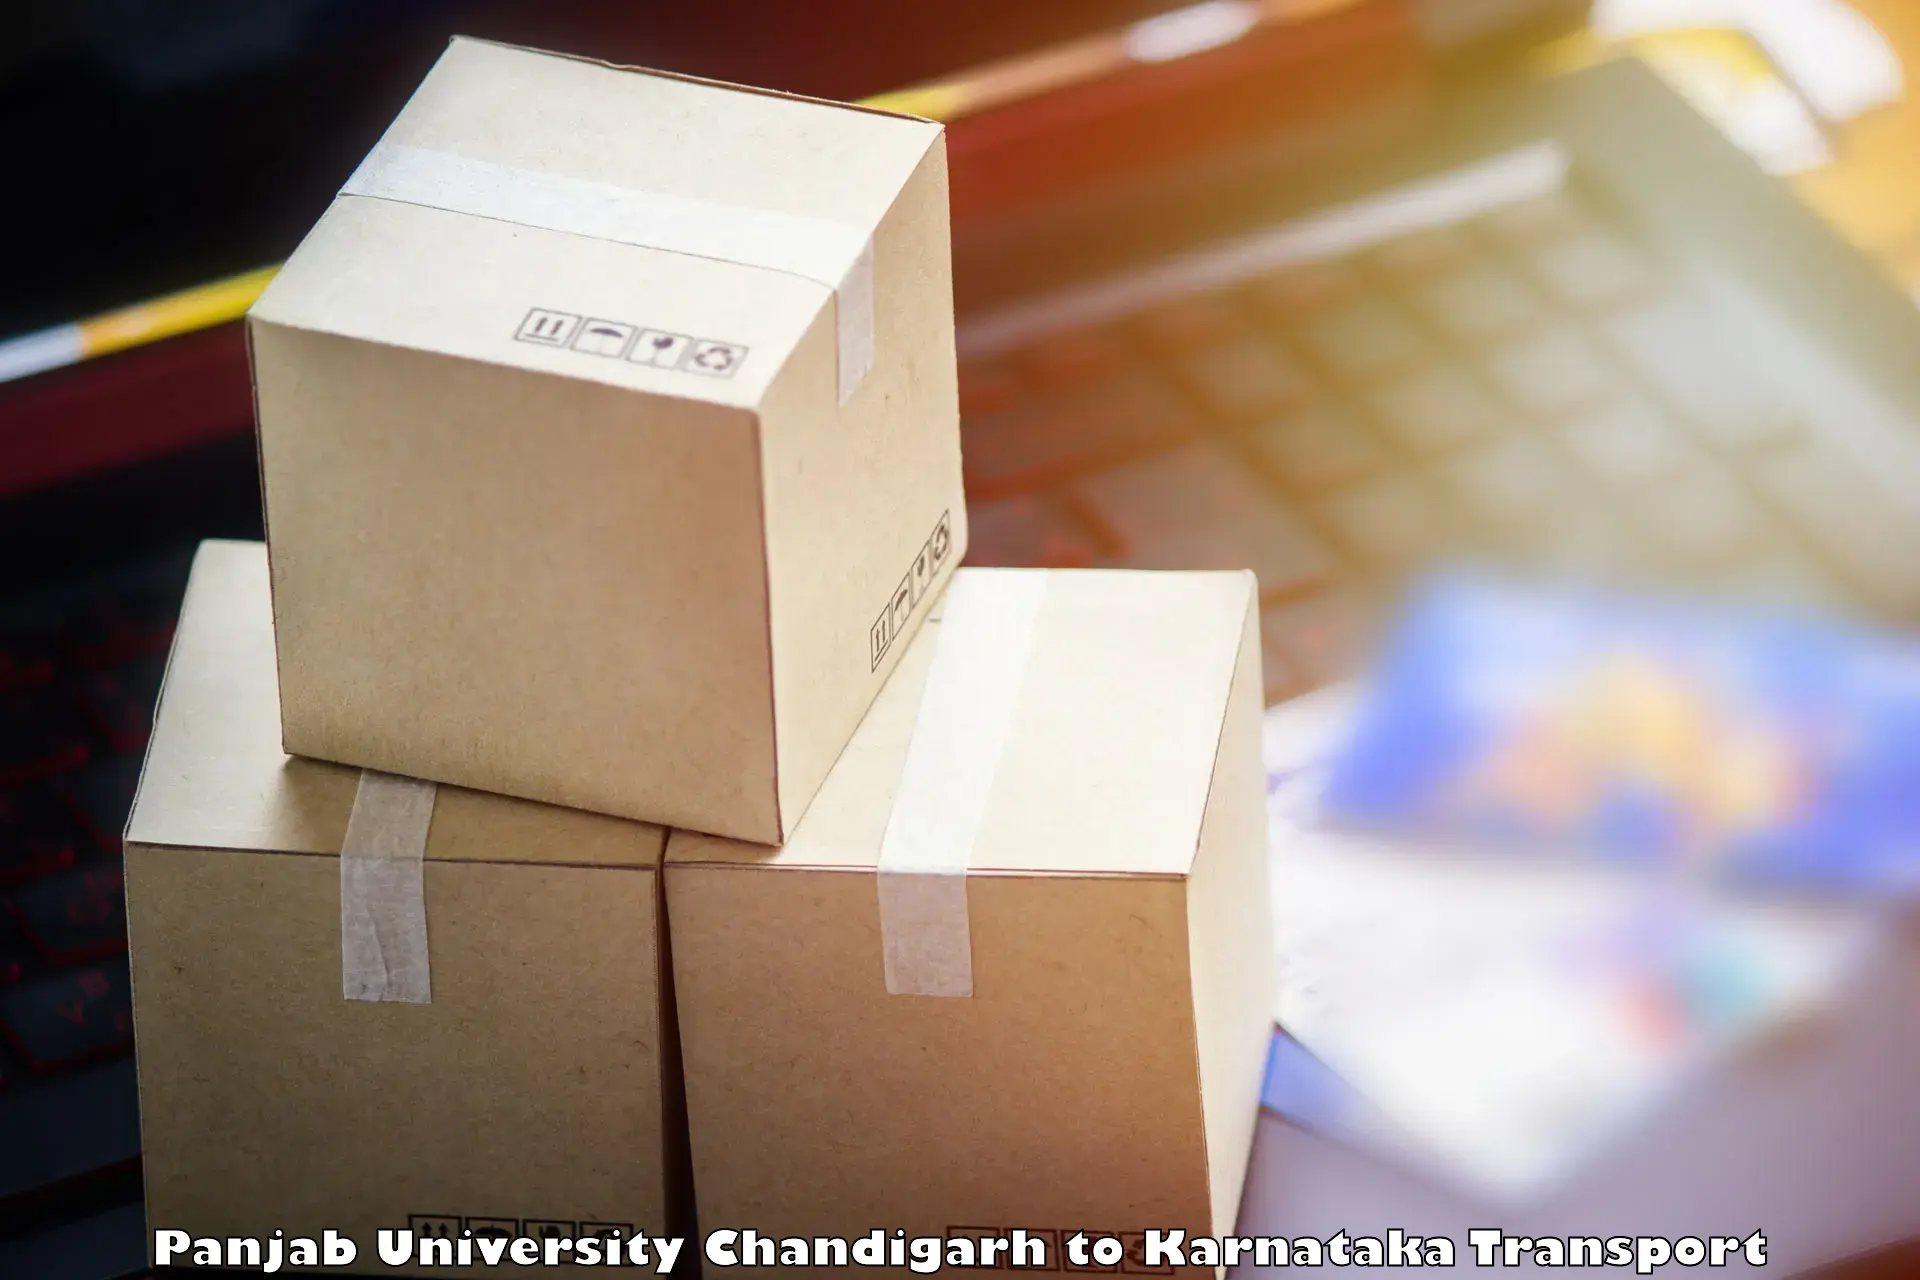 Goods delivery service Panjab University Chandigarh to Karnataka